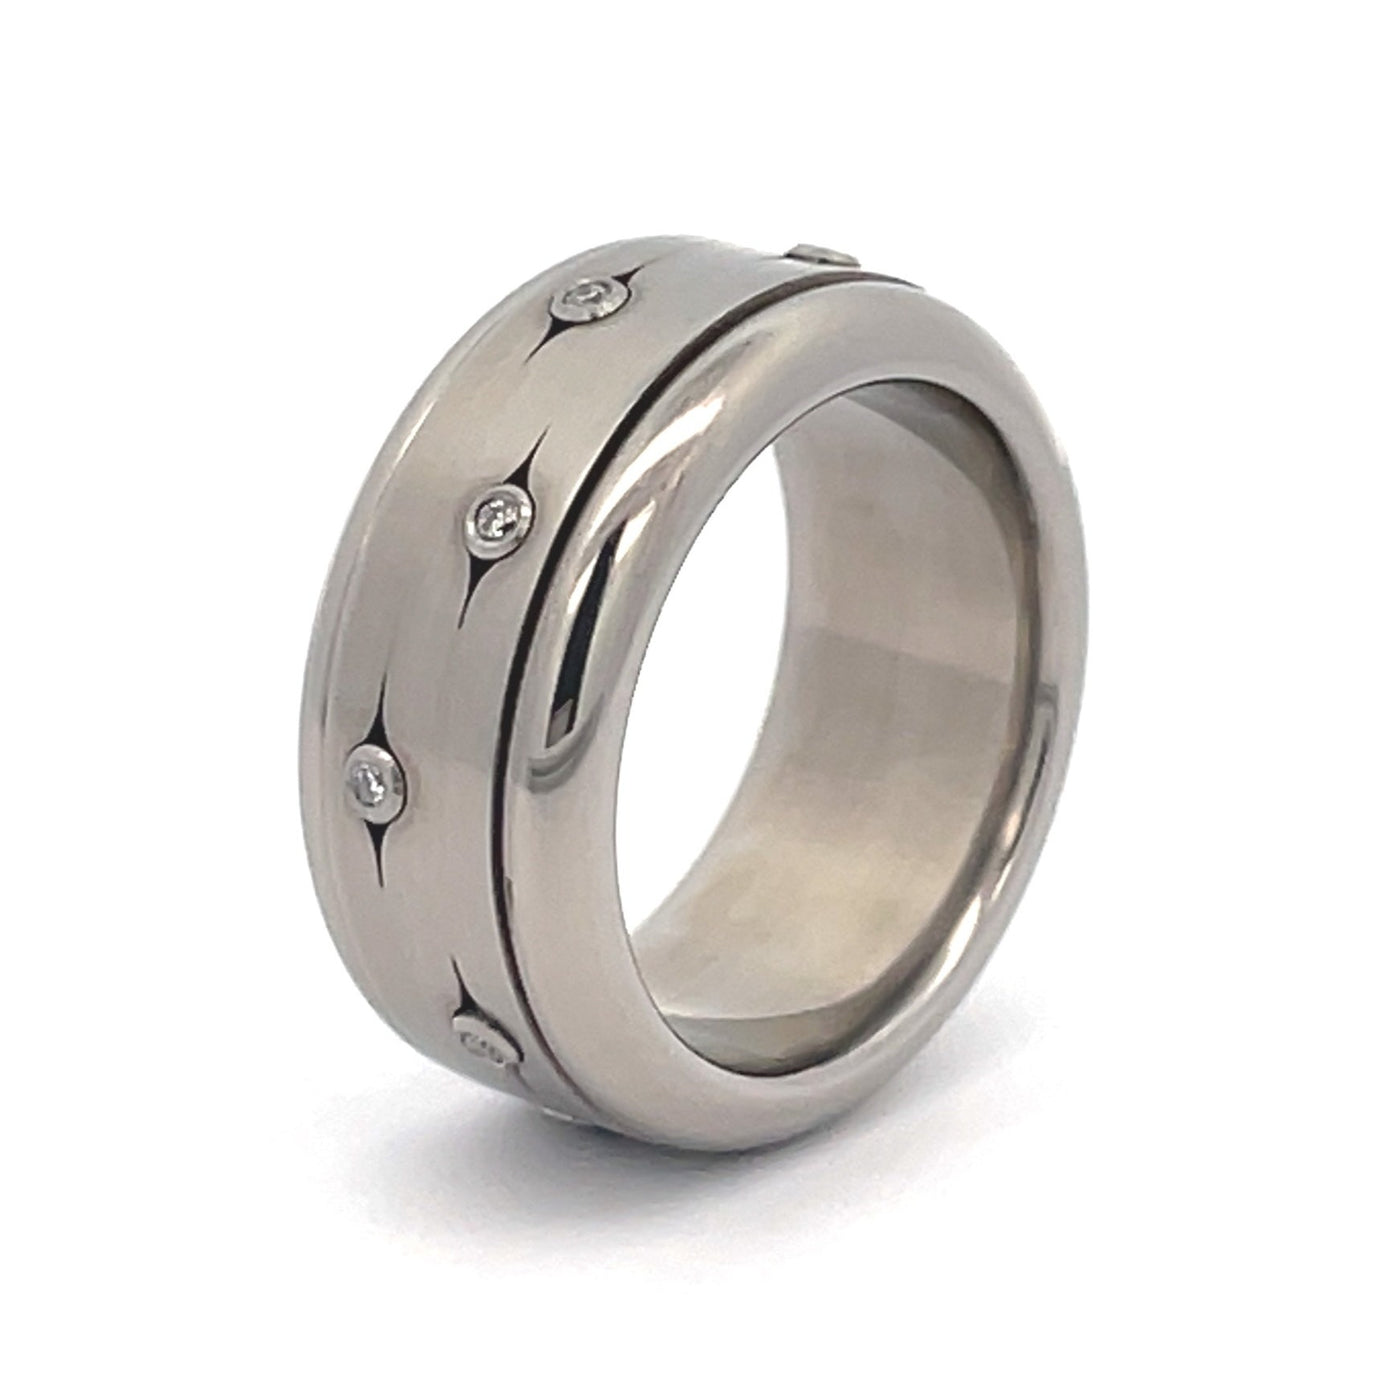 10mm Stainless Steel Spinner Diamond Eternity Ring - Size N